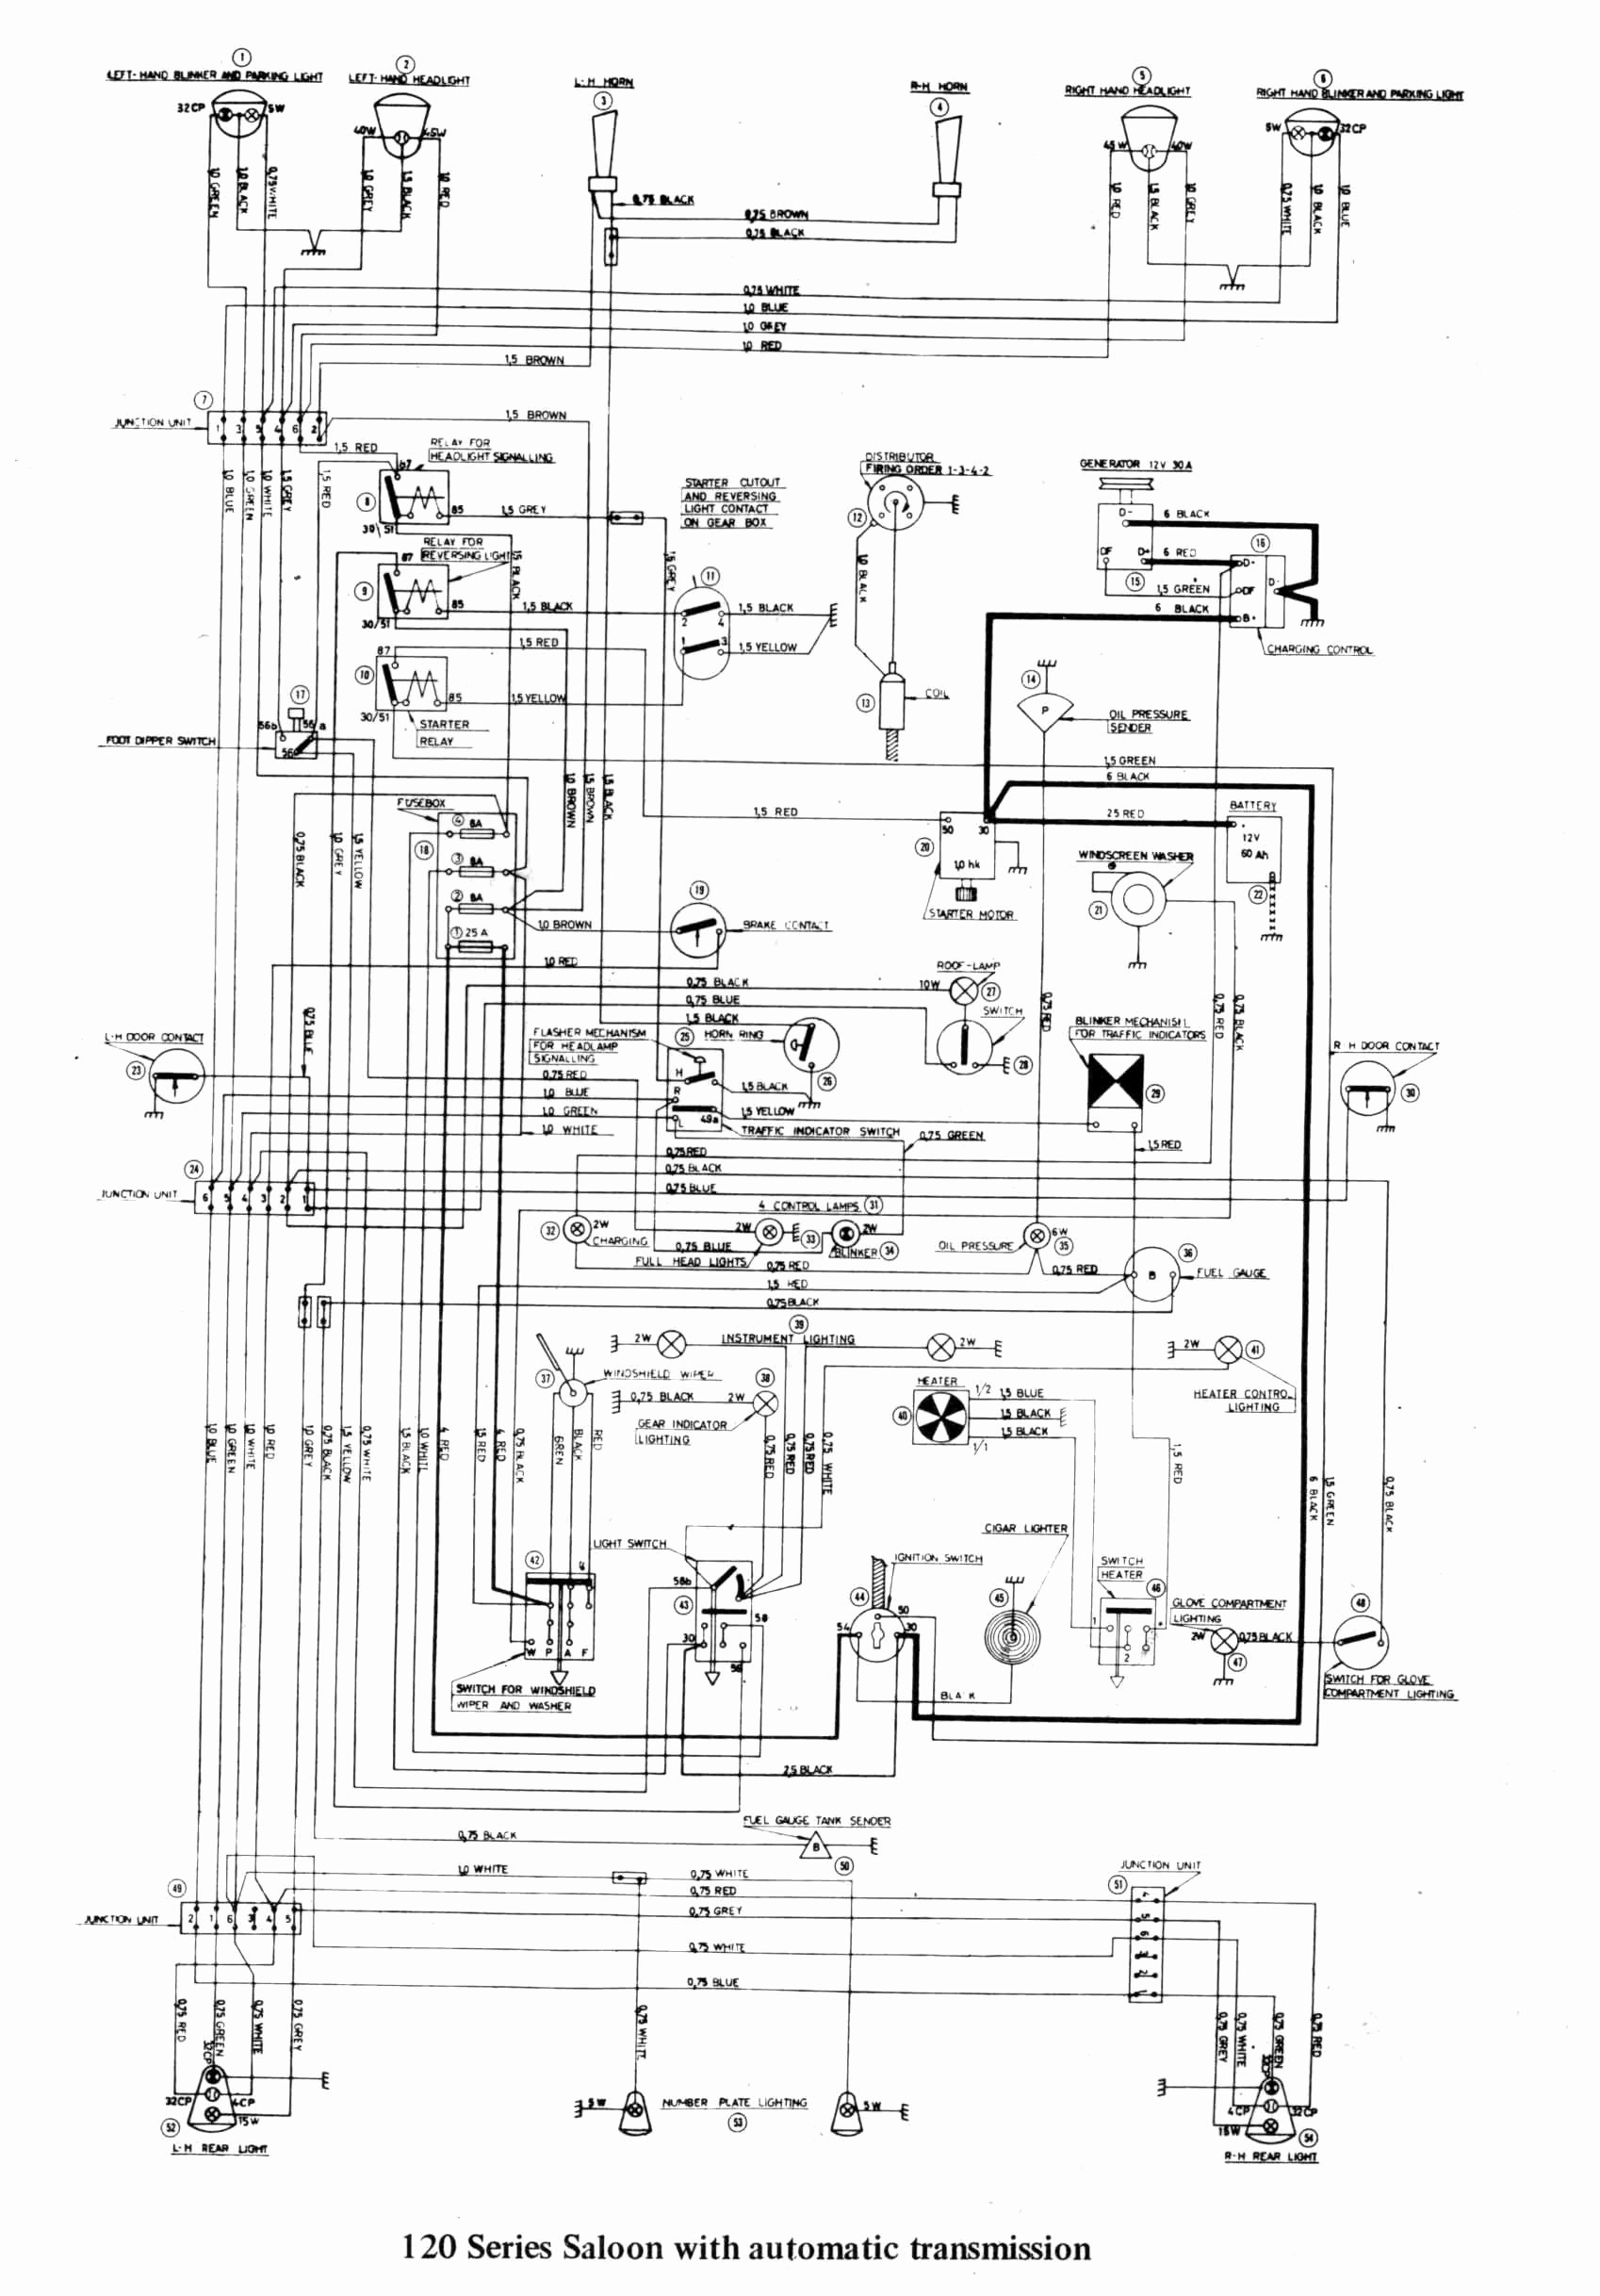 Ford 4.6 Wiring Diagram from detoxicrecenze.com